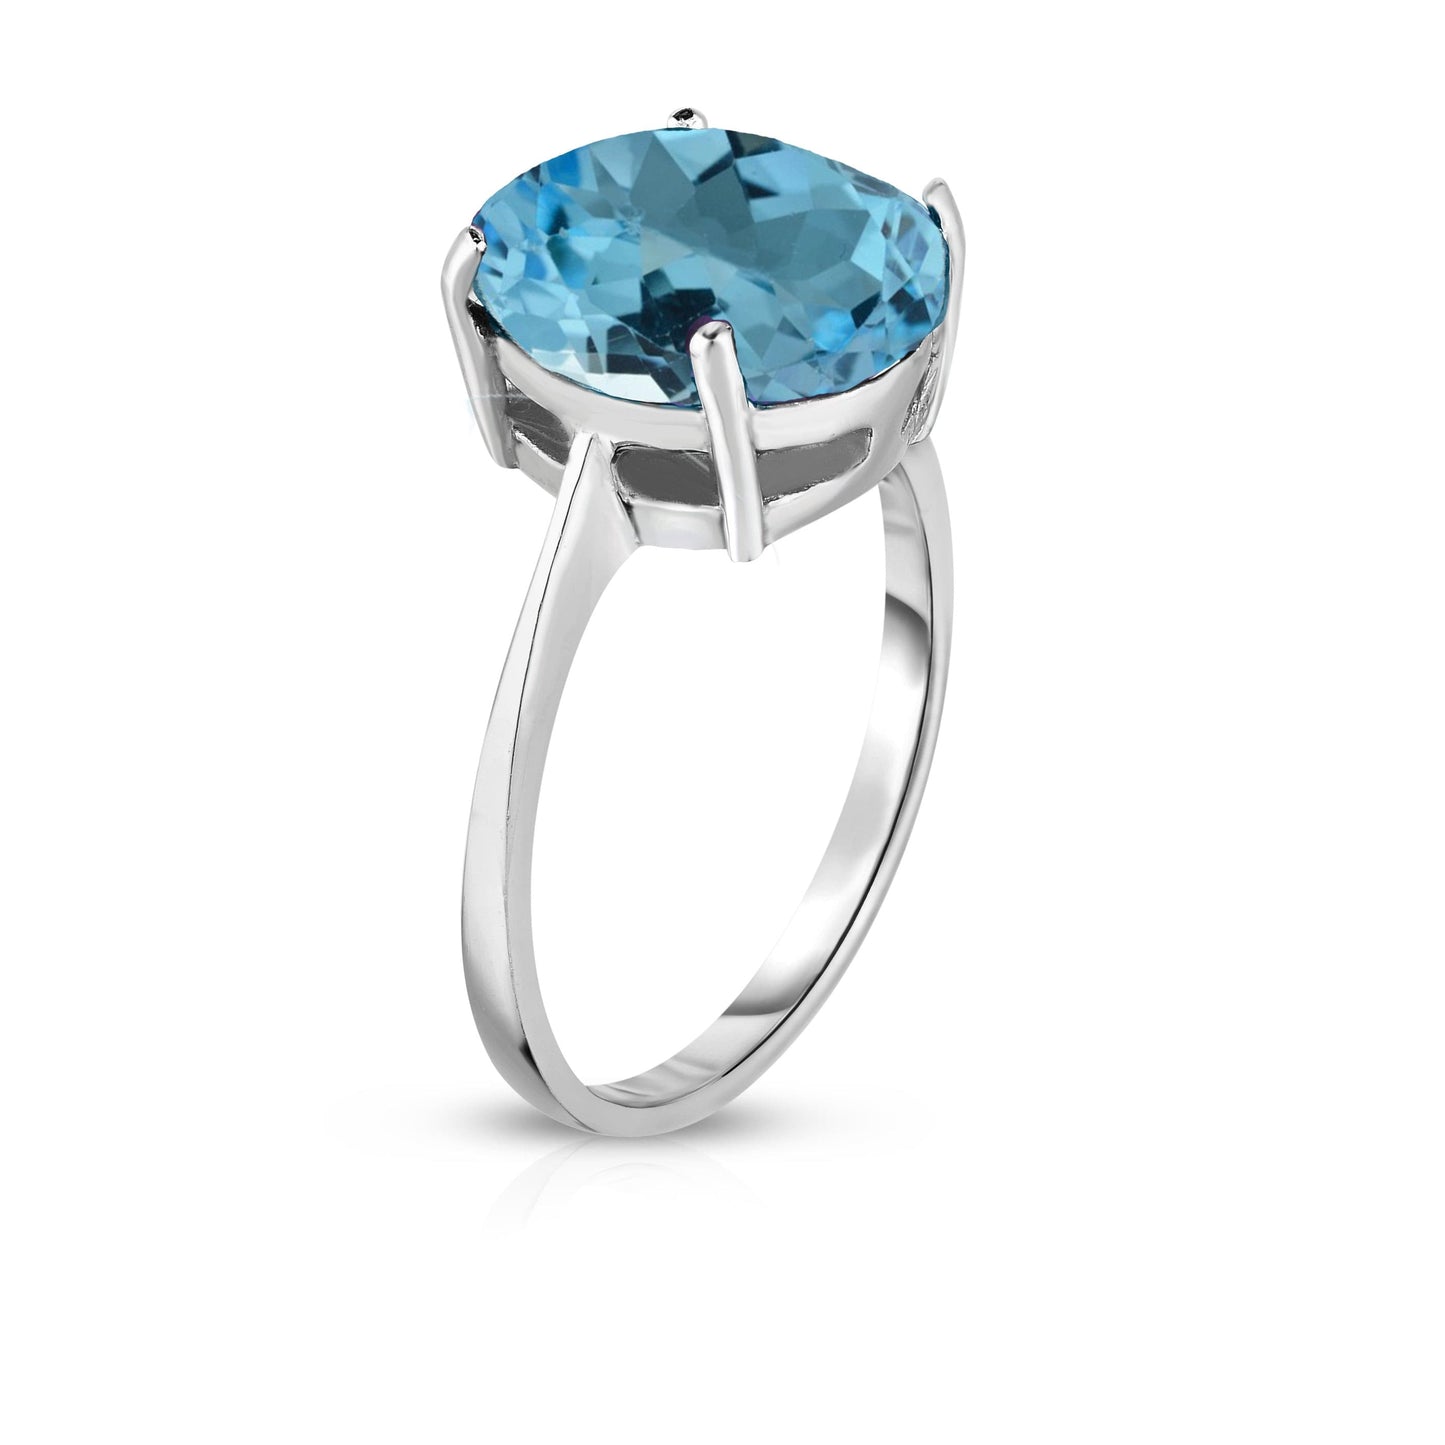 Blue Topaz Genuine Oval Cut Gemstone Sterling Silver Ring